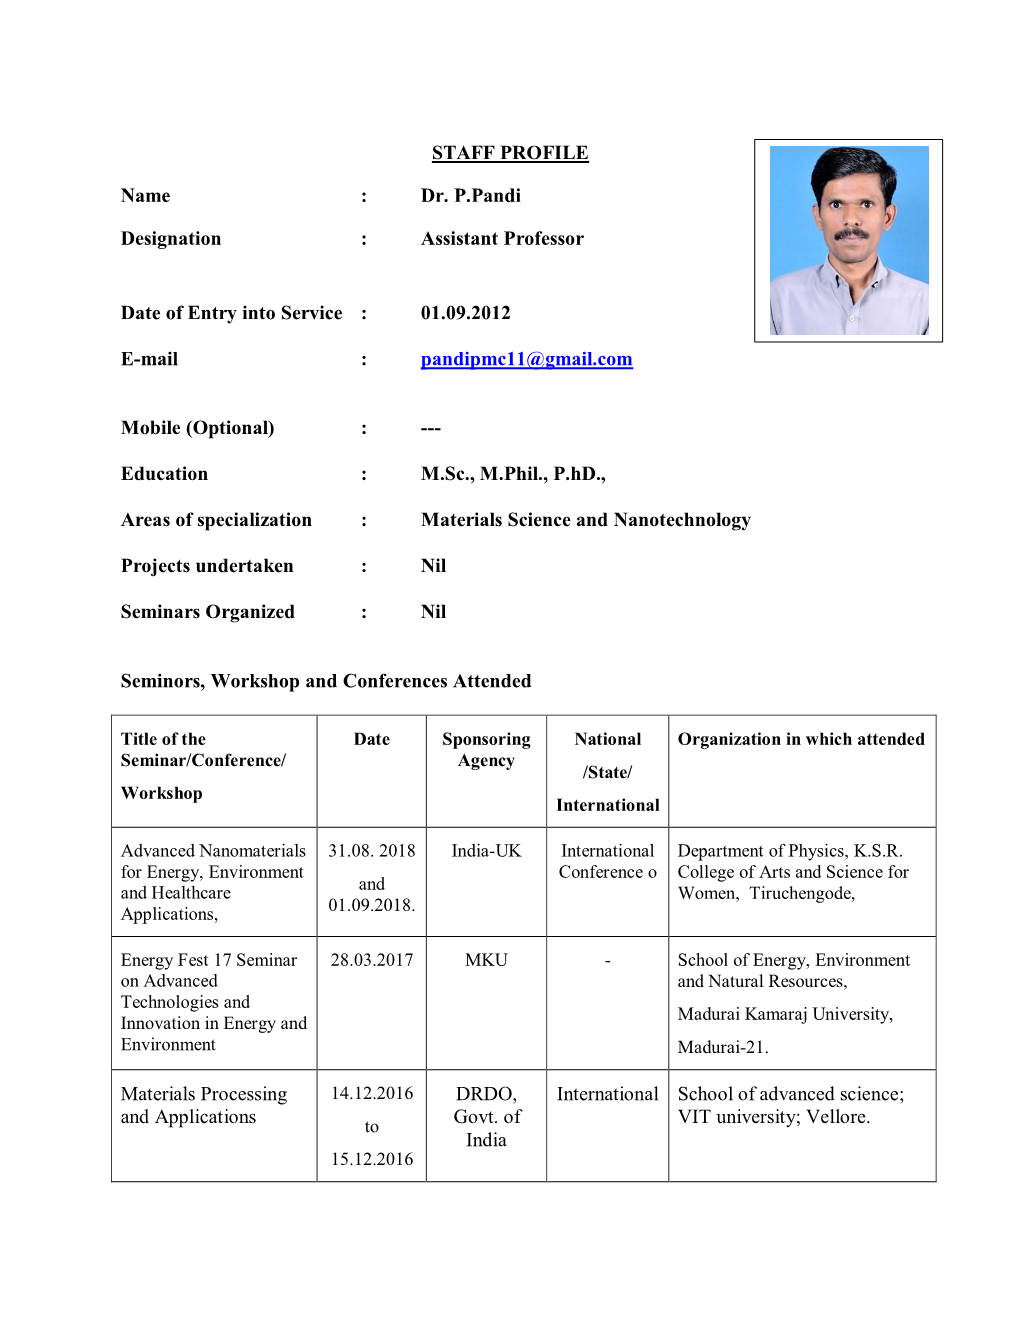 Dr. P.Pandi Designation : Assistant Professor Date of Entry Into Service